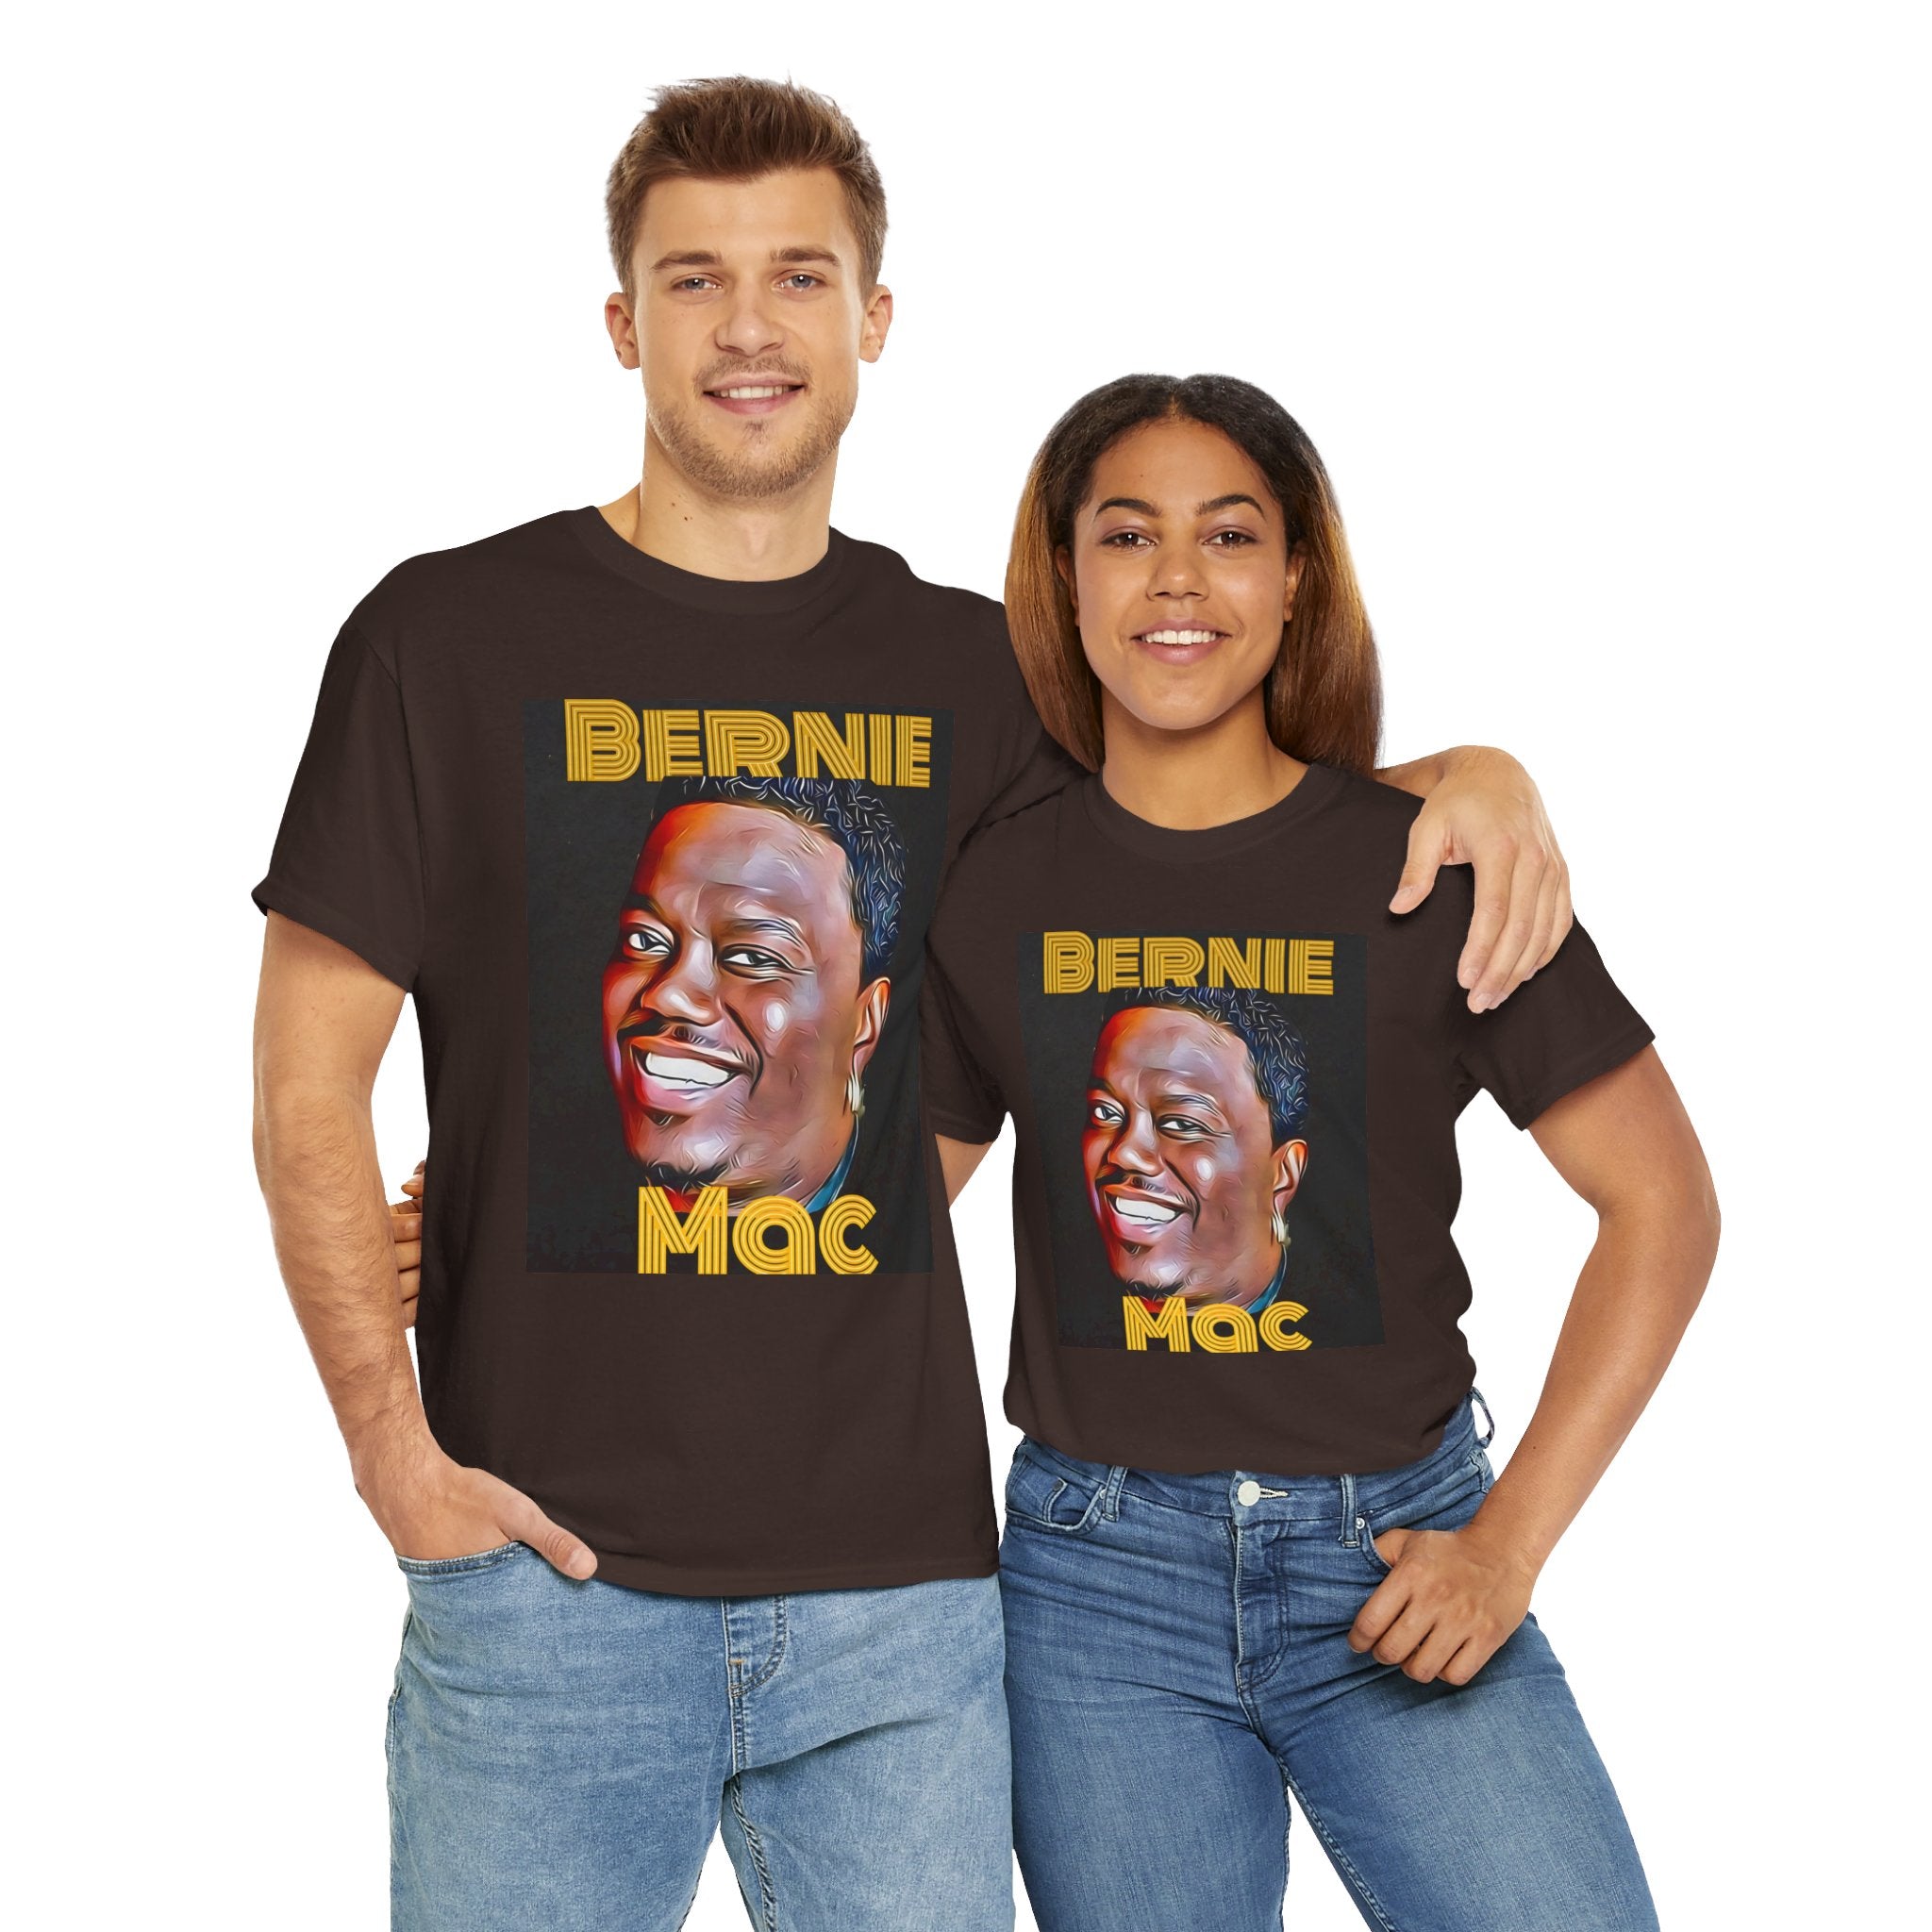 Bernie Mac T-shirt